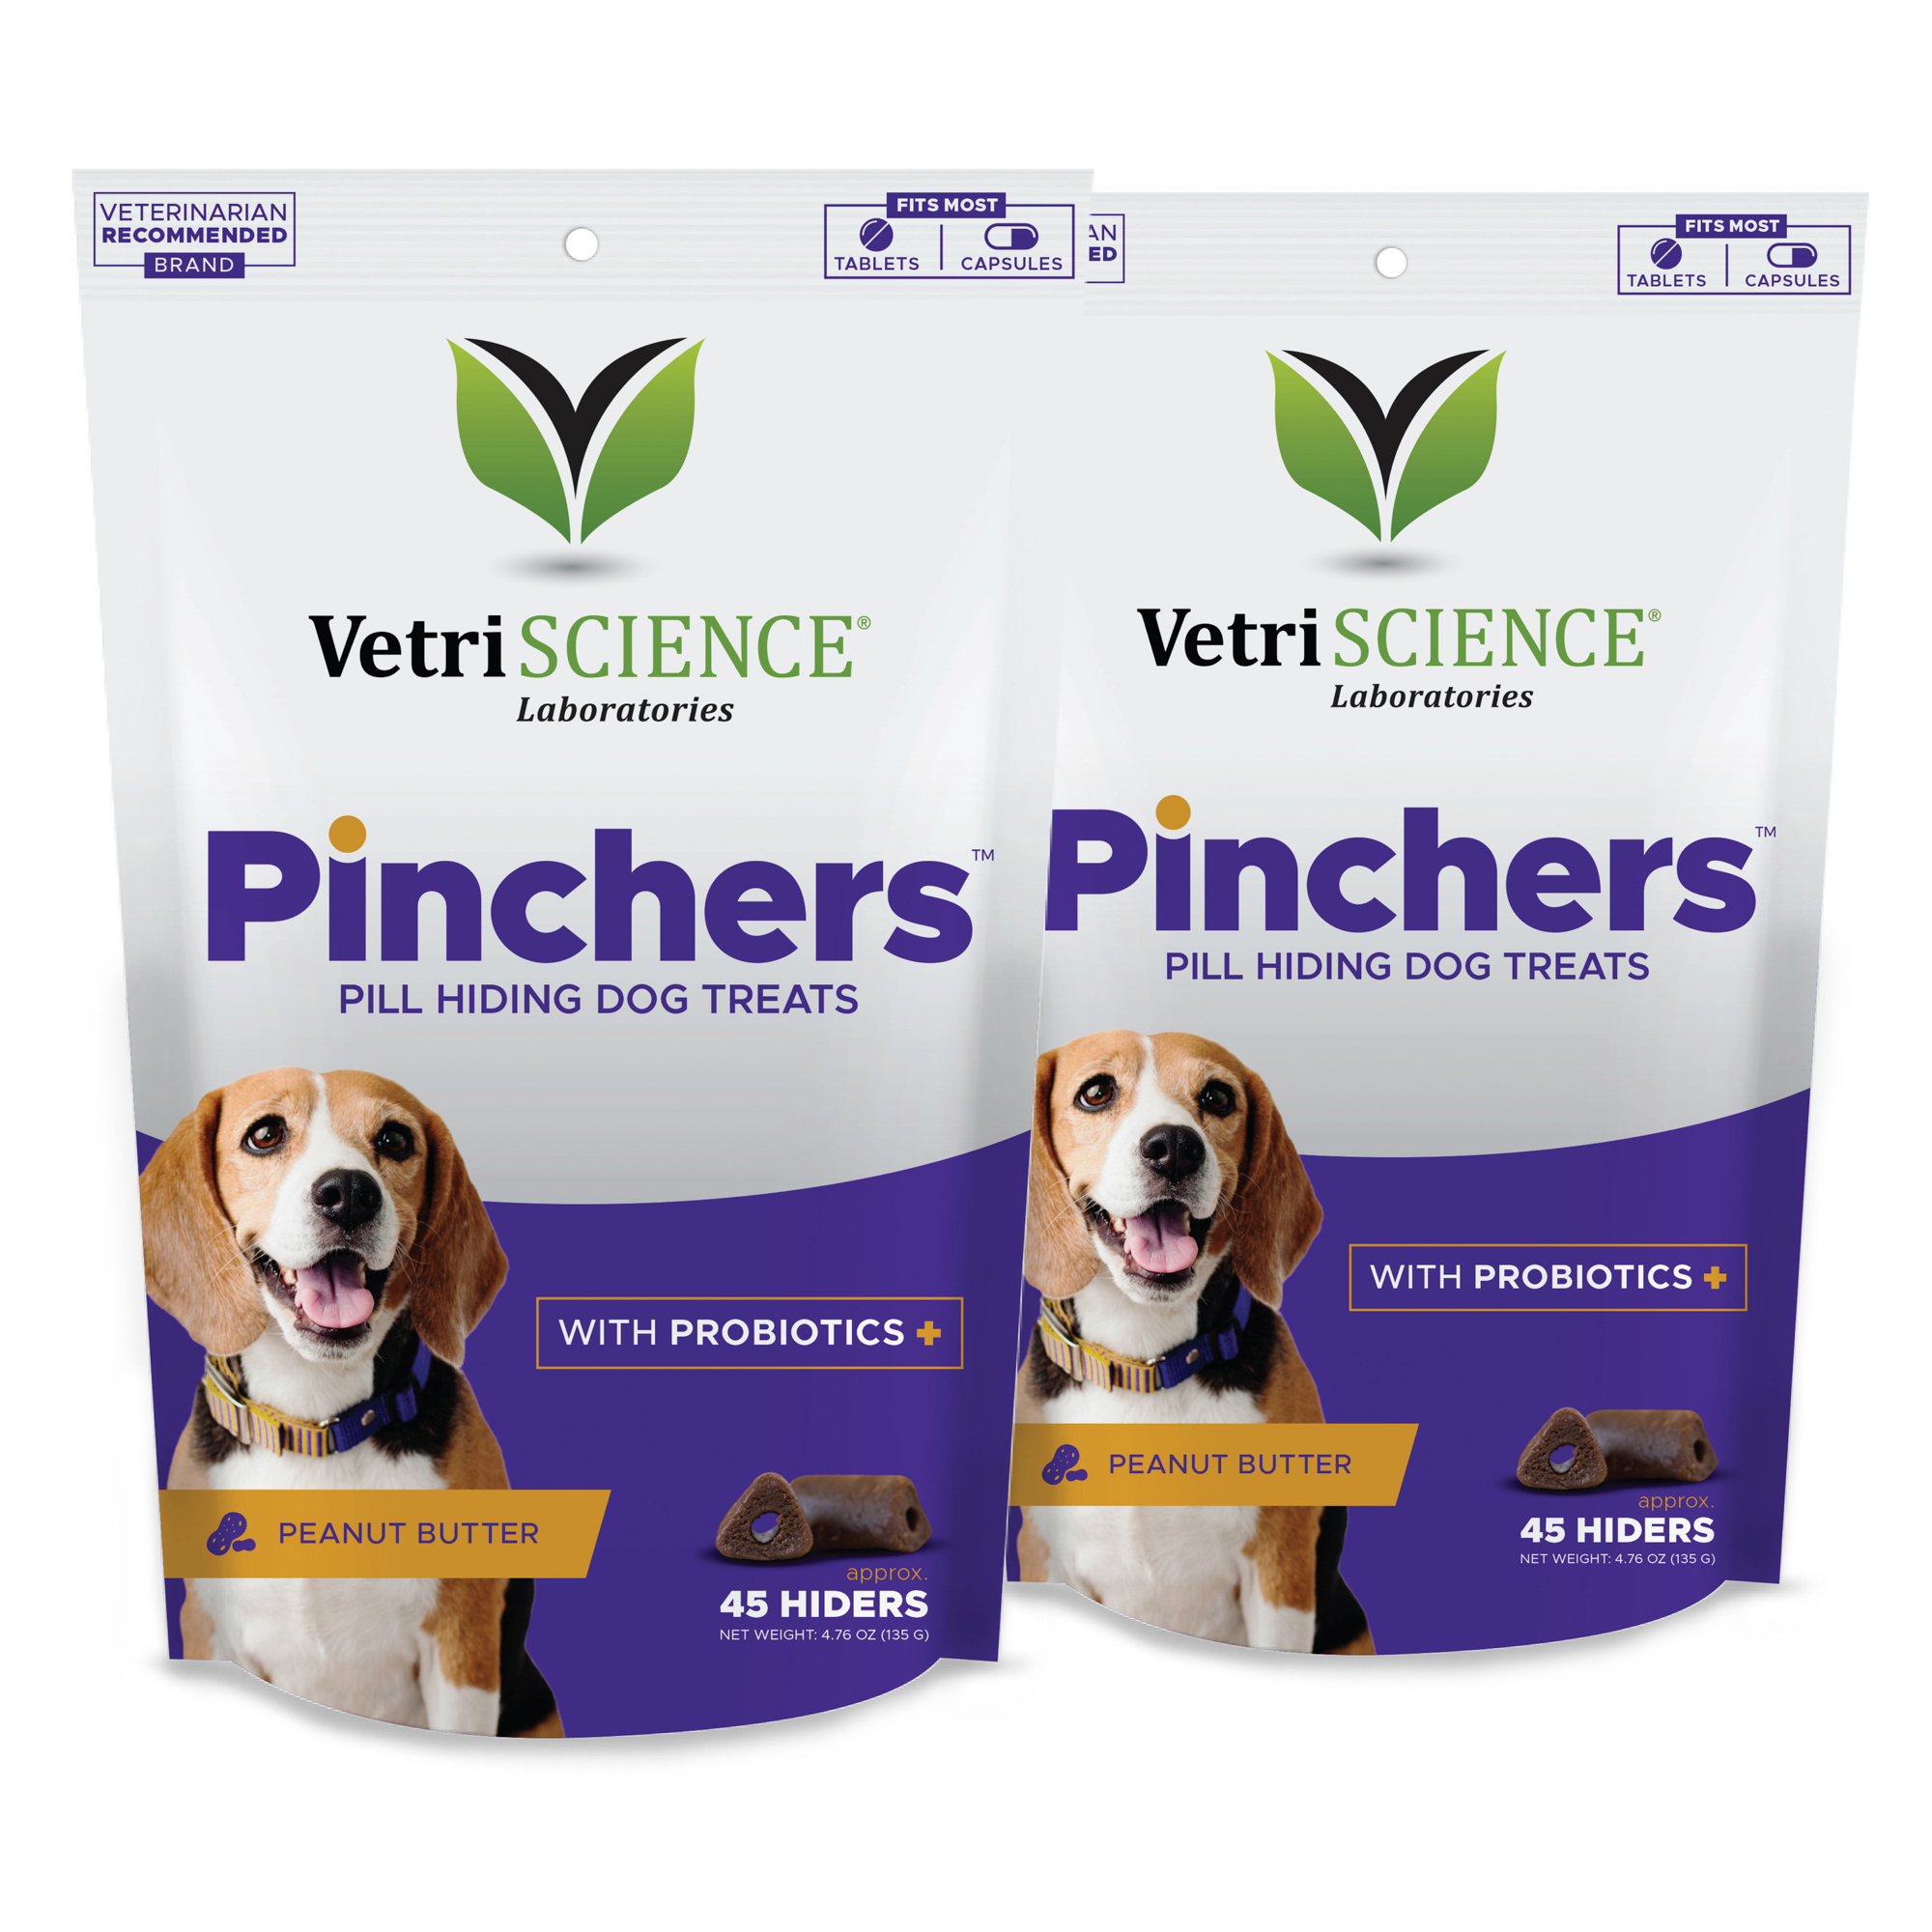 Pinchers Pill Hiding Dog Treats Usage